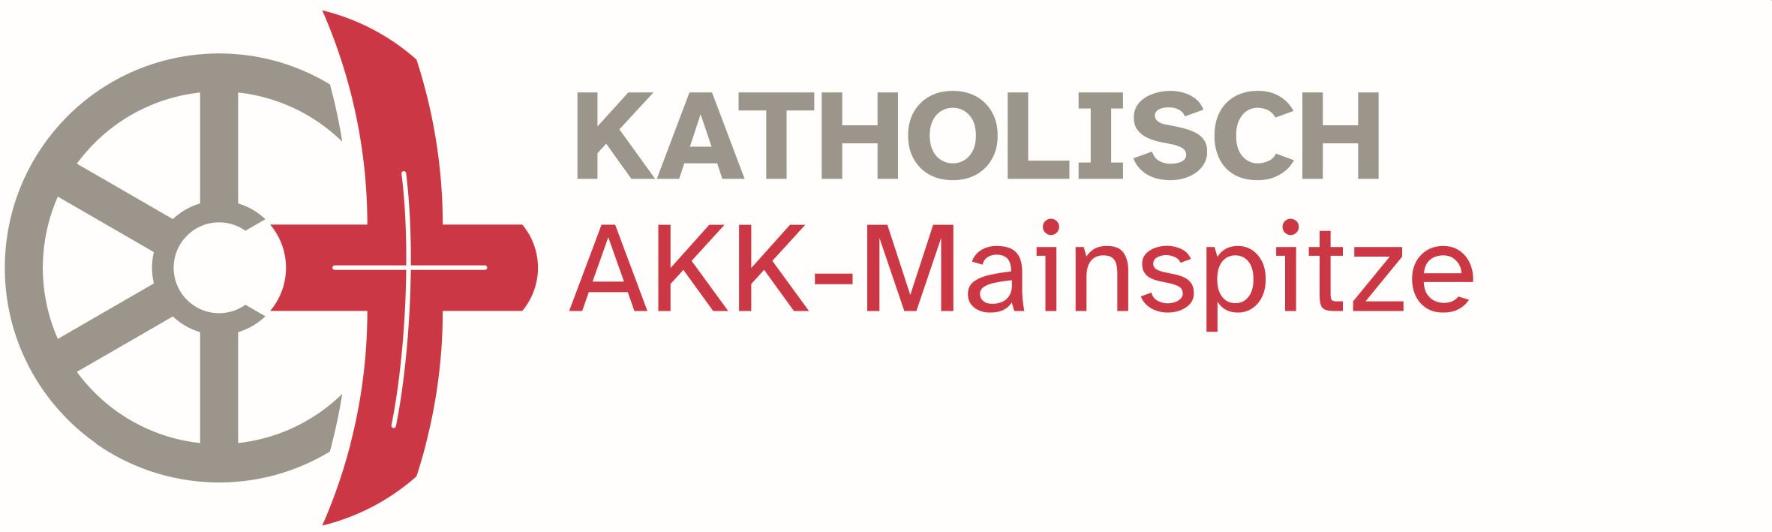 AKK-Mainspitze_CMYK_classic (c) Bistum Mainz